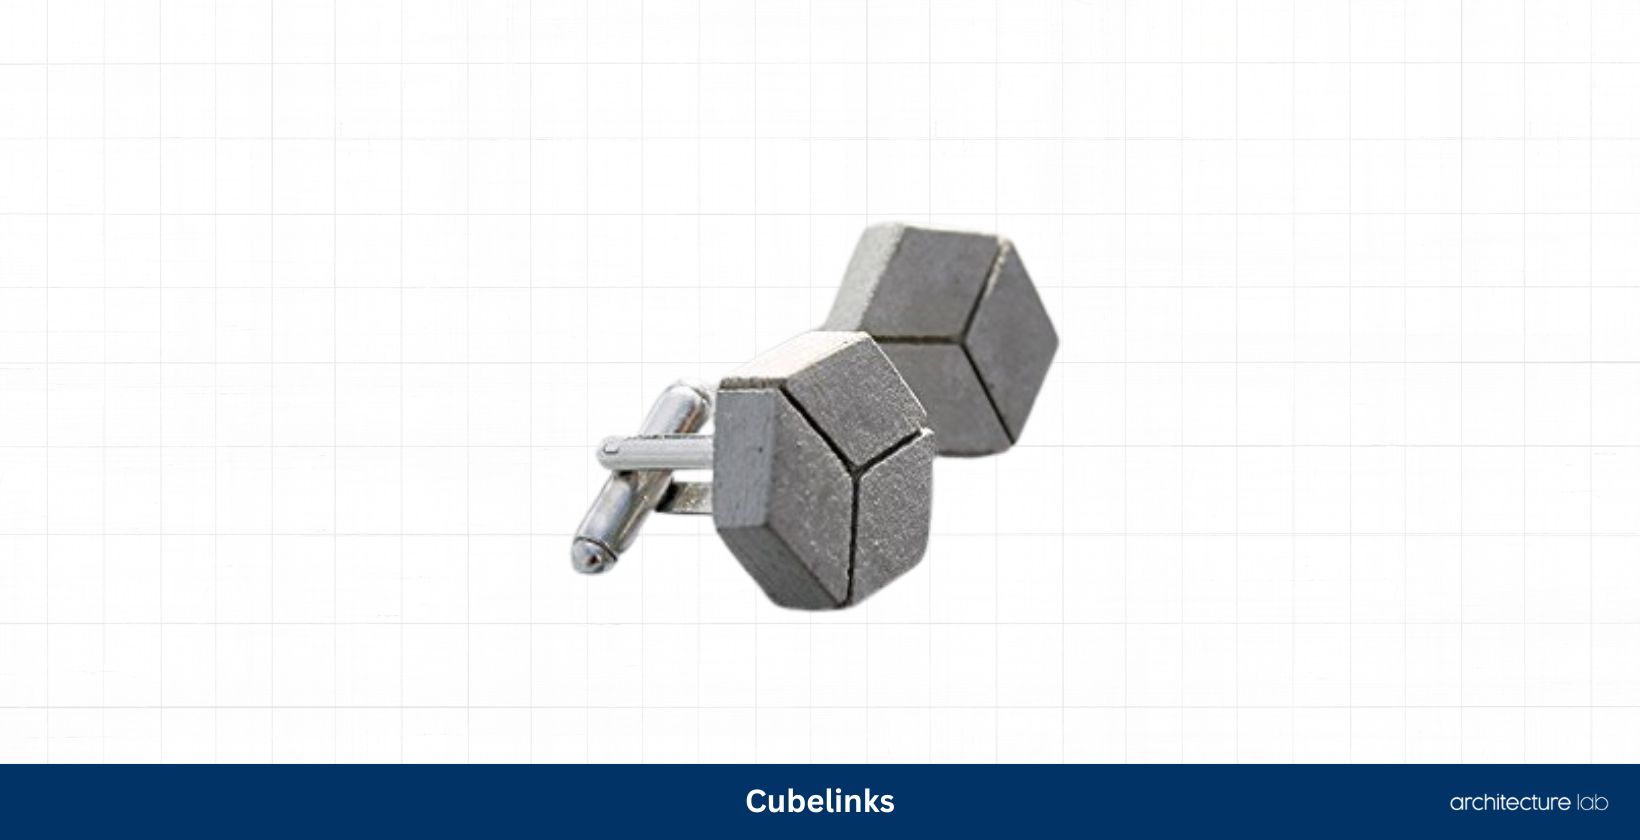 Cubelinks – cufflinks made of concrete